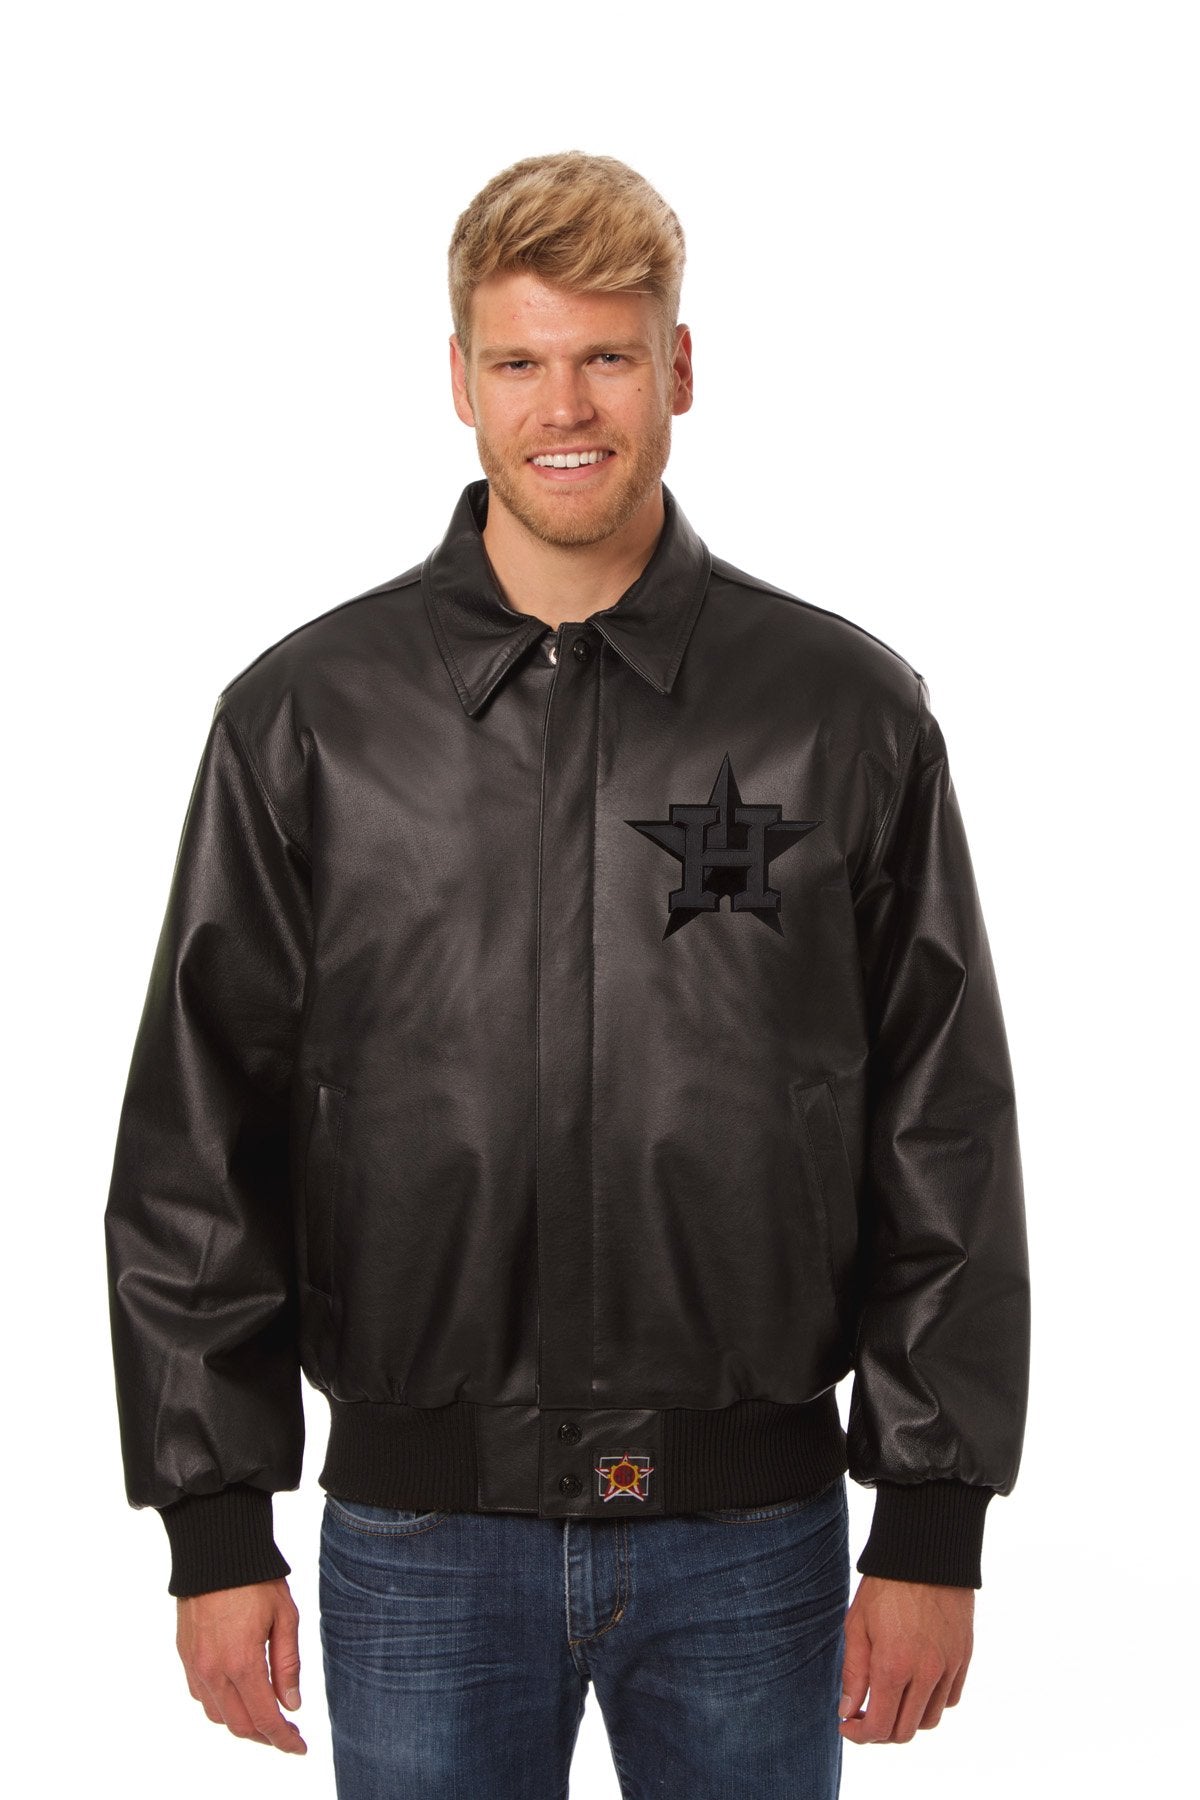 Men's Astros Leather Jacket